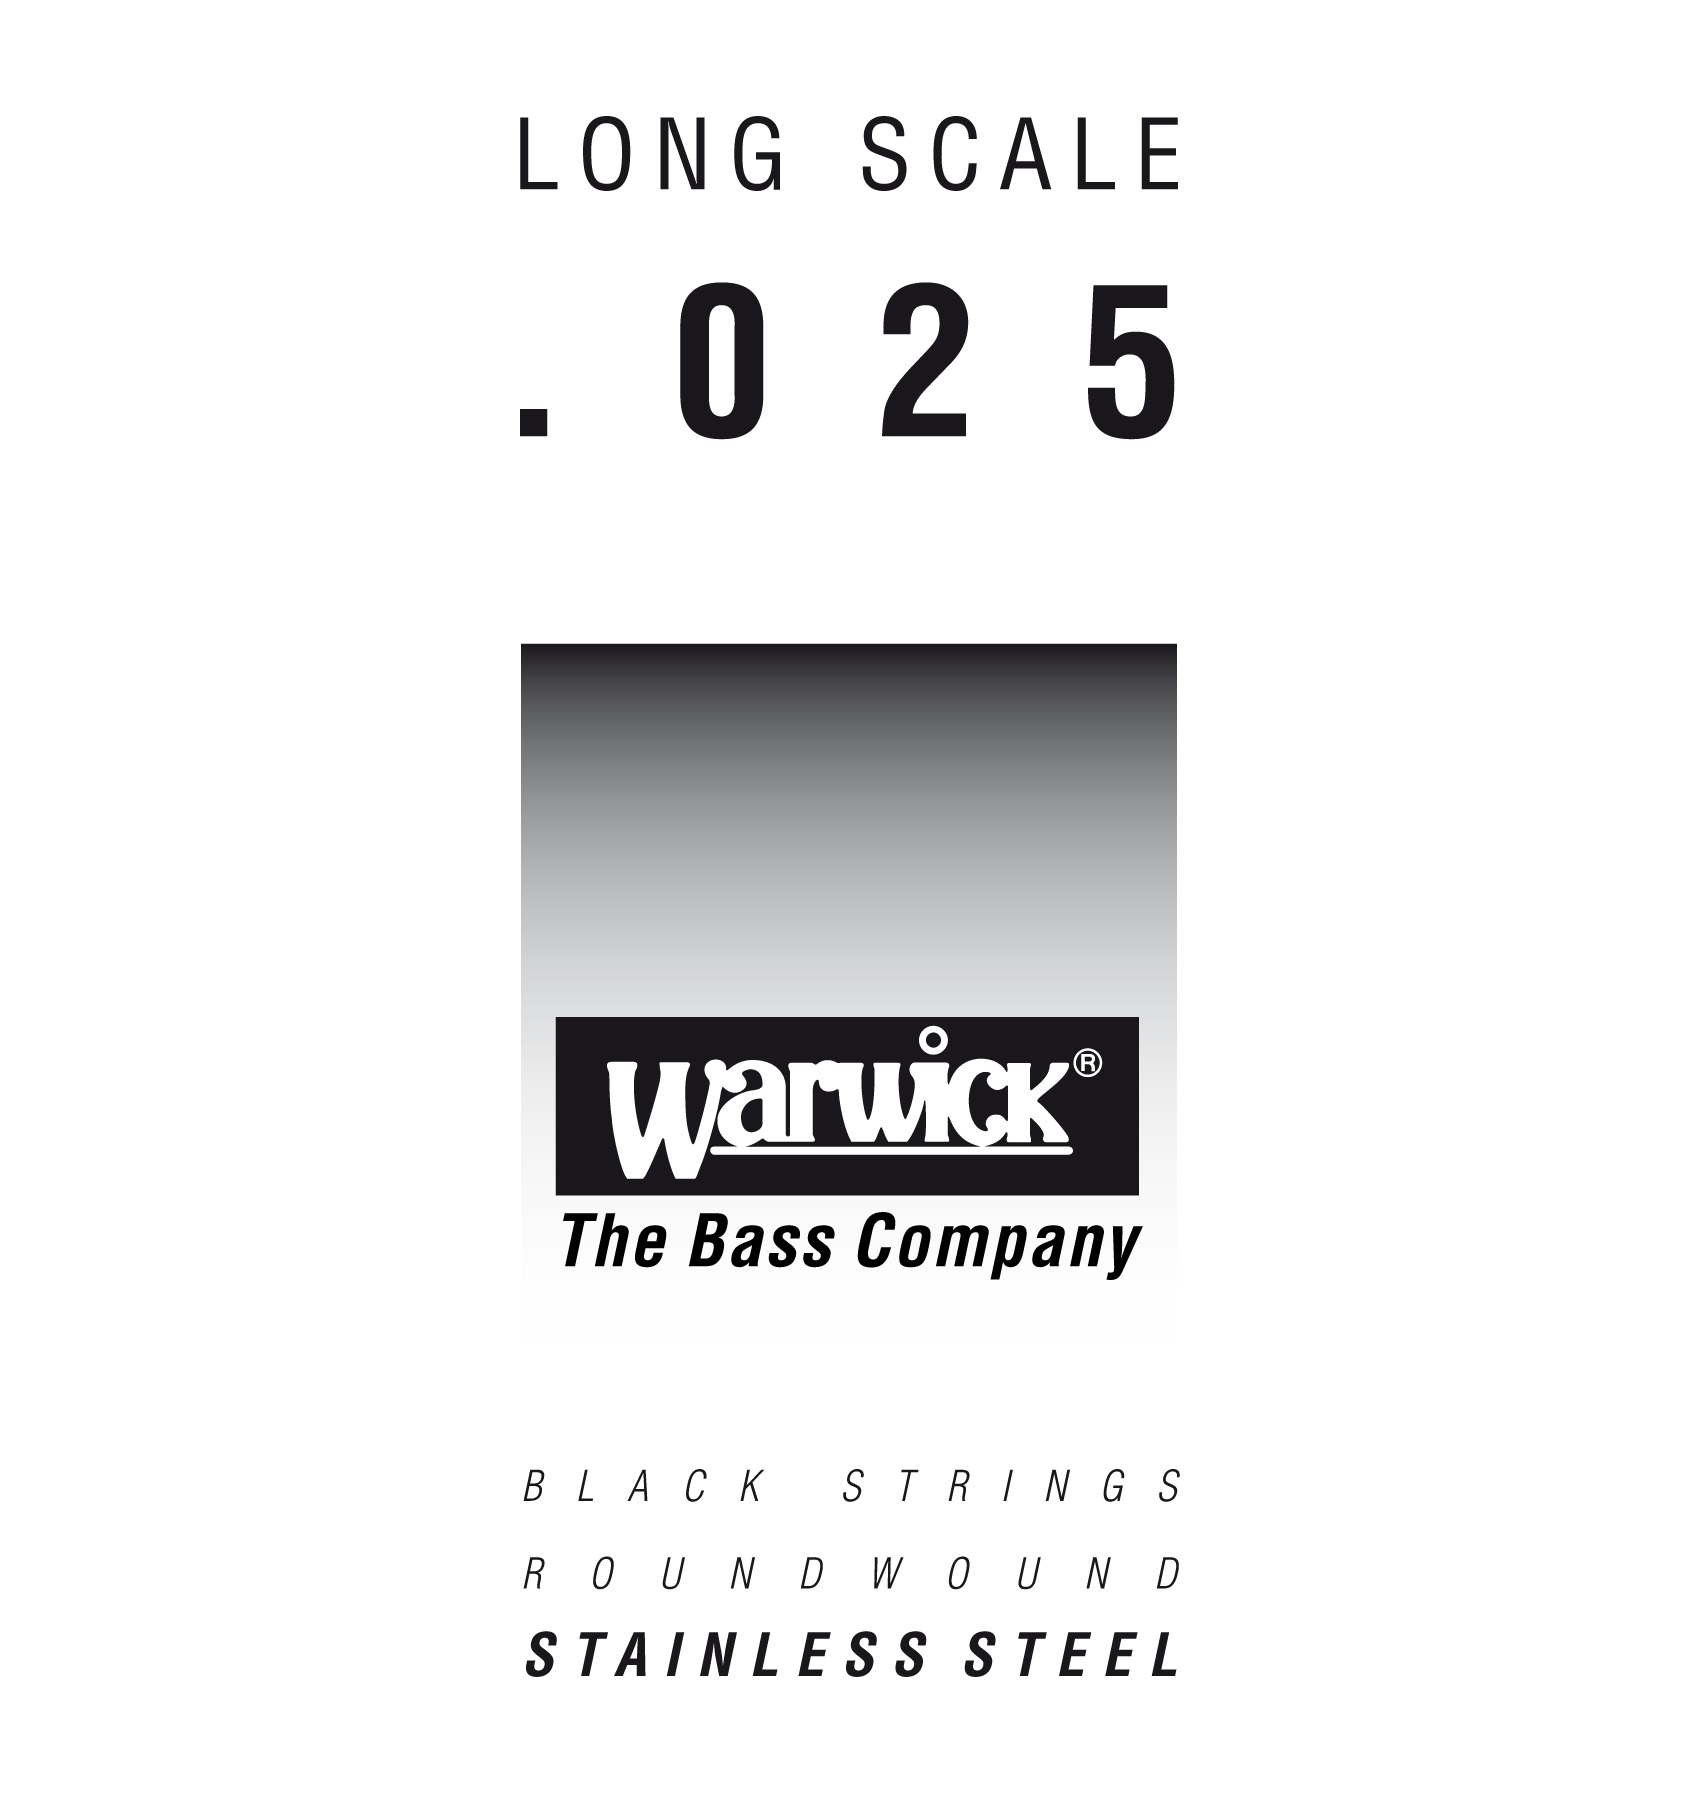 Warwick Black Label Bass Strings, Stainless Steel - Bass Single String, .025", Long Scale